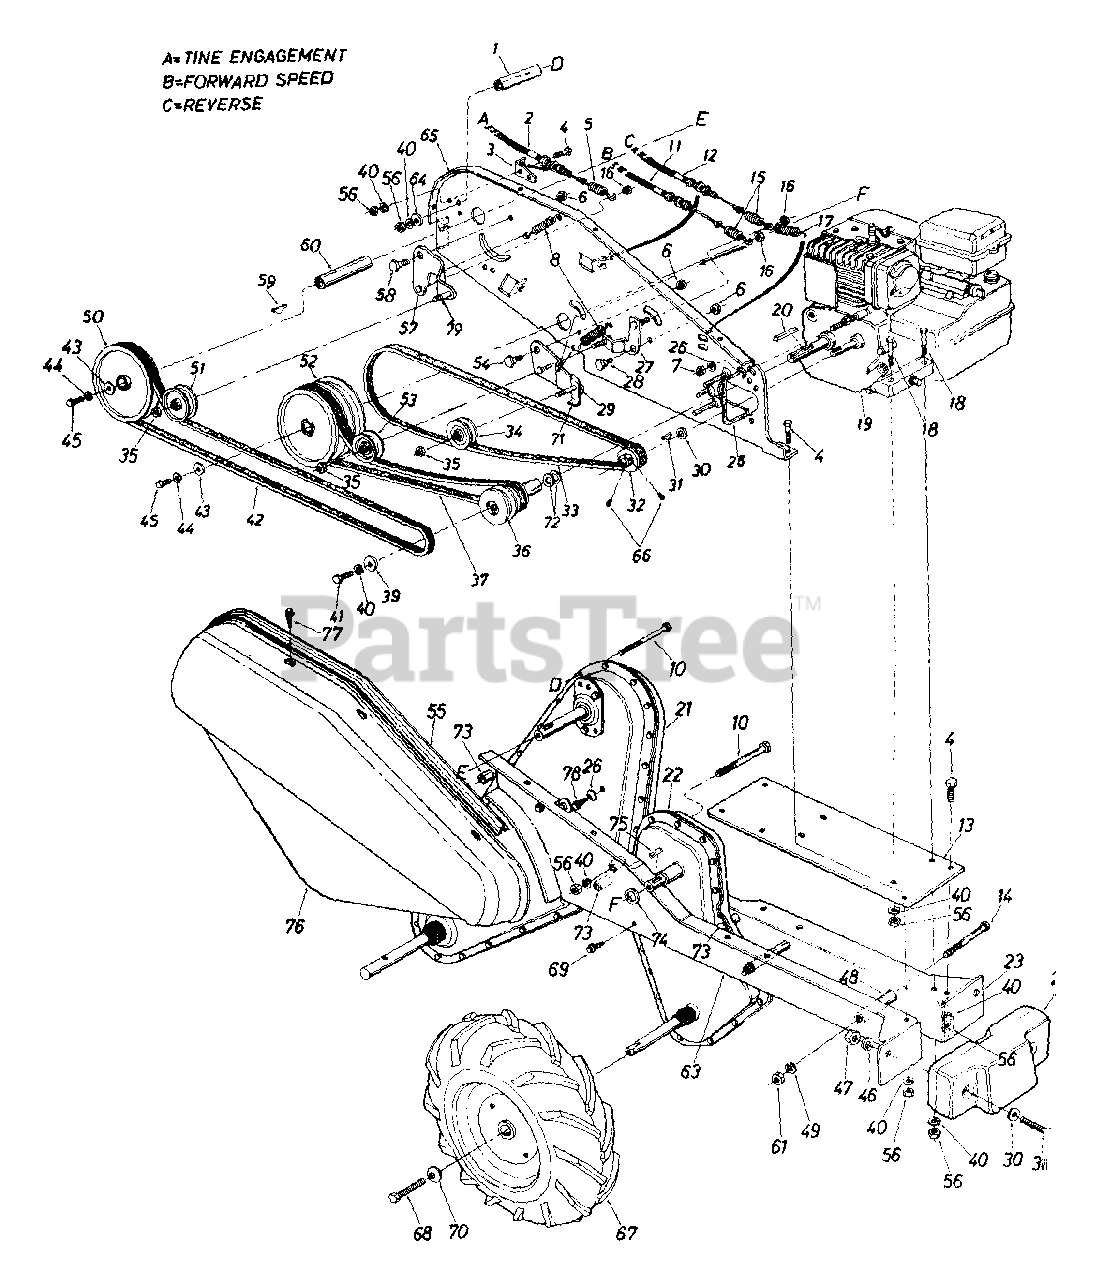 MTD 212-406-134 - MTD Tiller (1992) (Home Depot) Tiller Assembly Parts Lookup with Diagrams ...